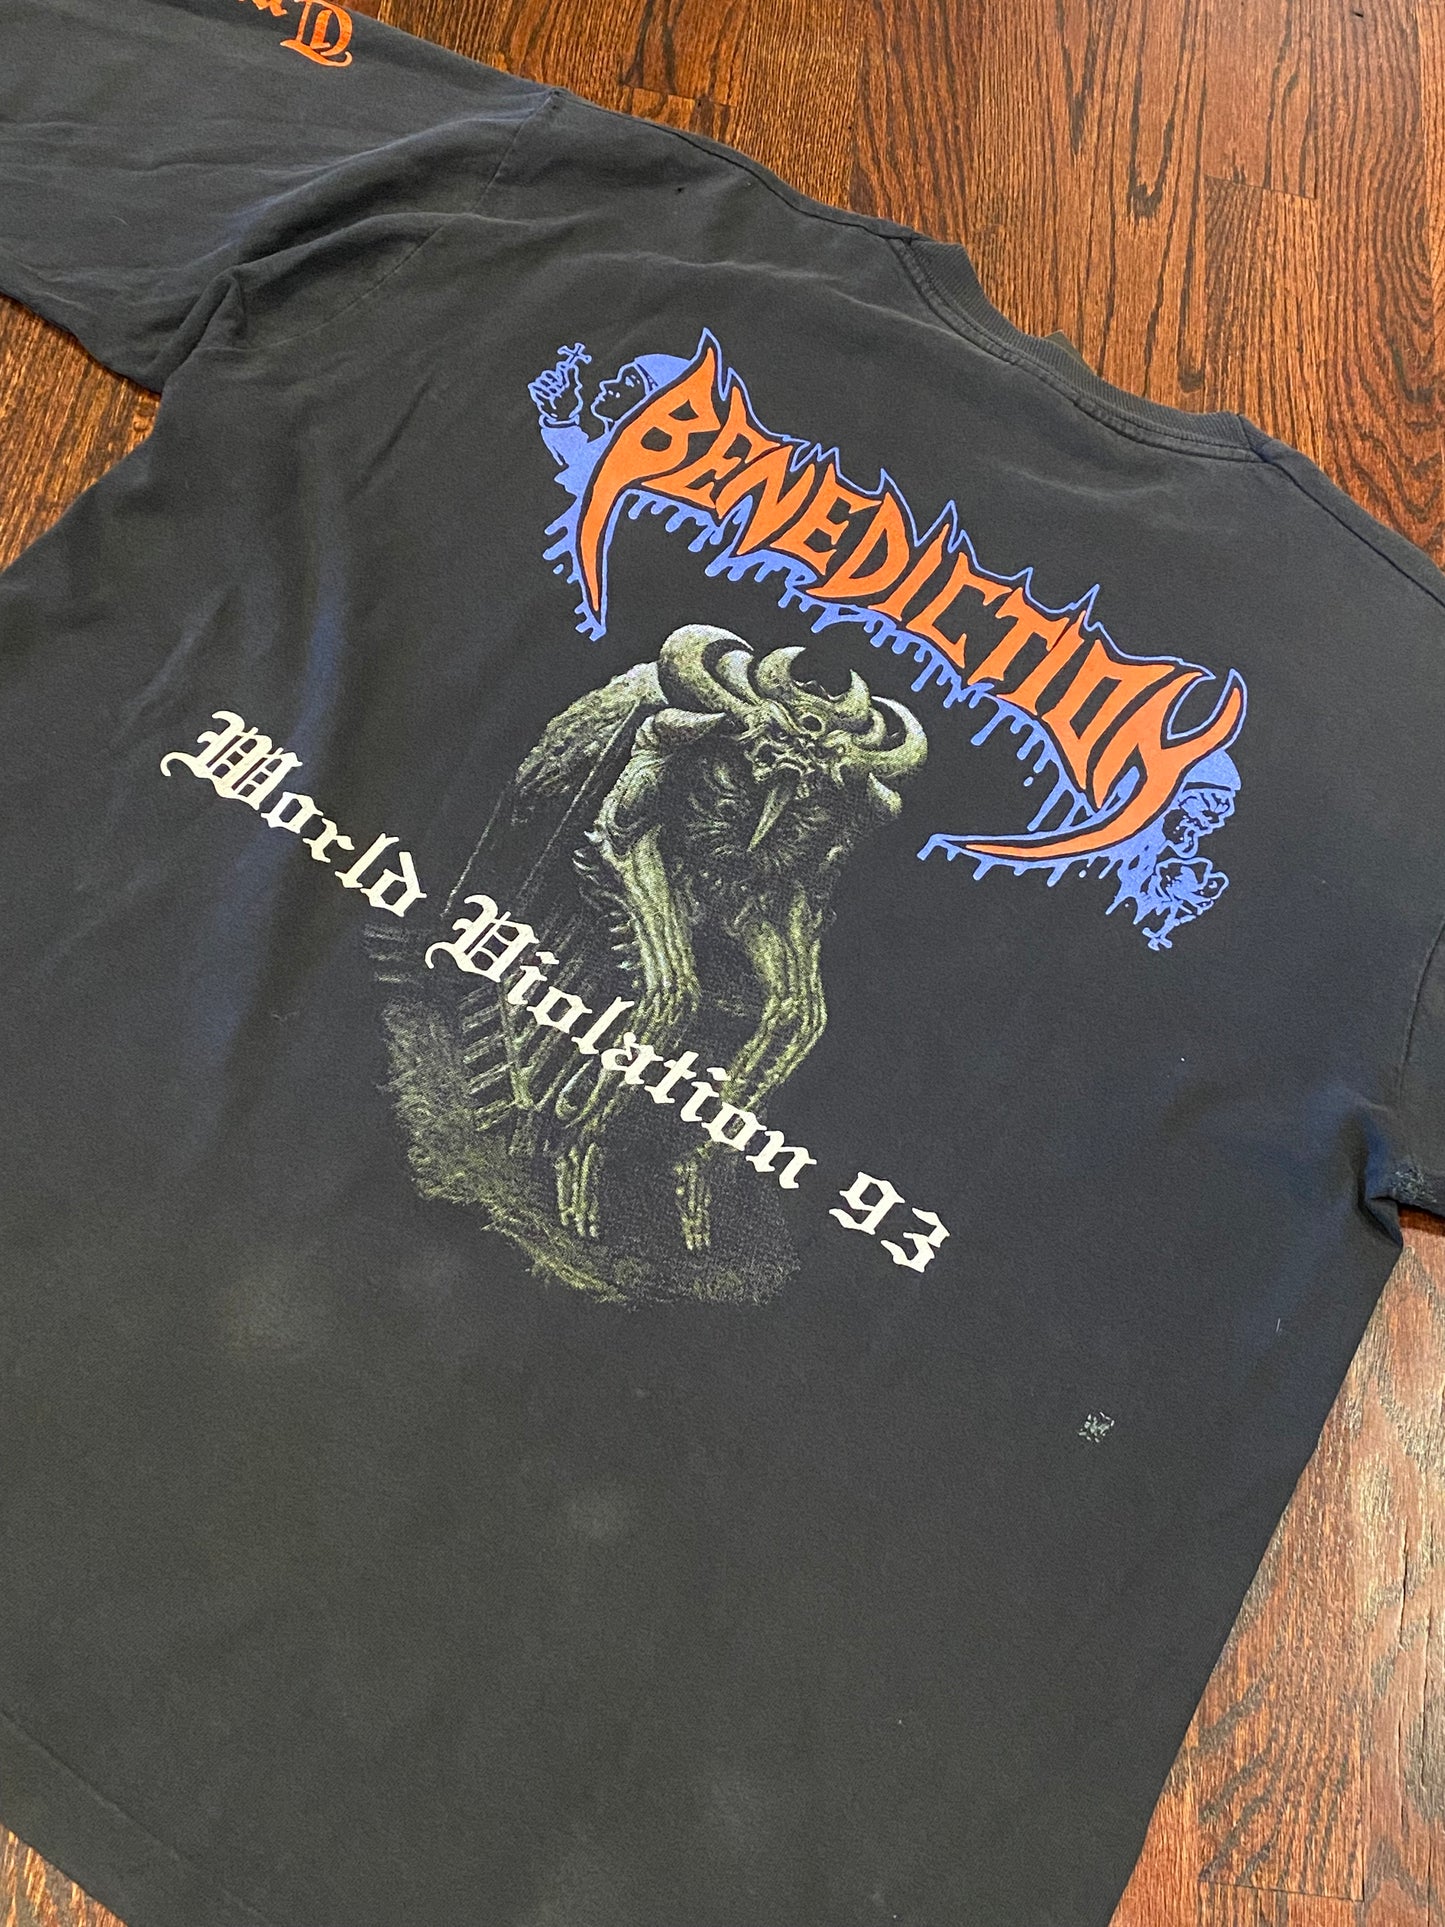 Vintage Benediction 1993 “World Violation” Tour Merch Long Sleeve Shirt